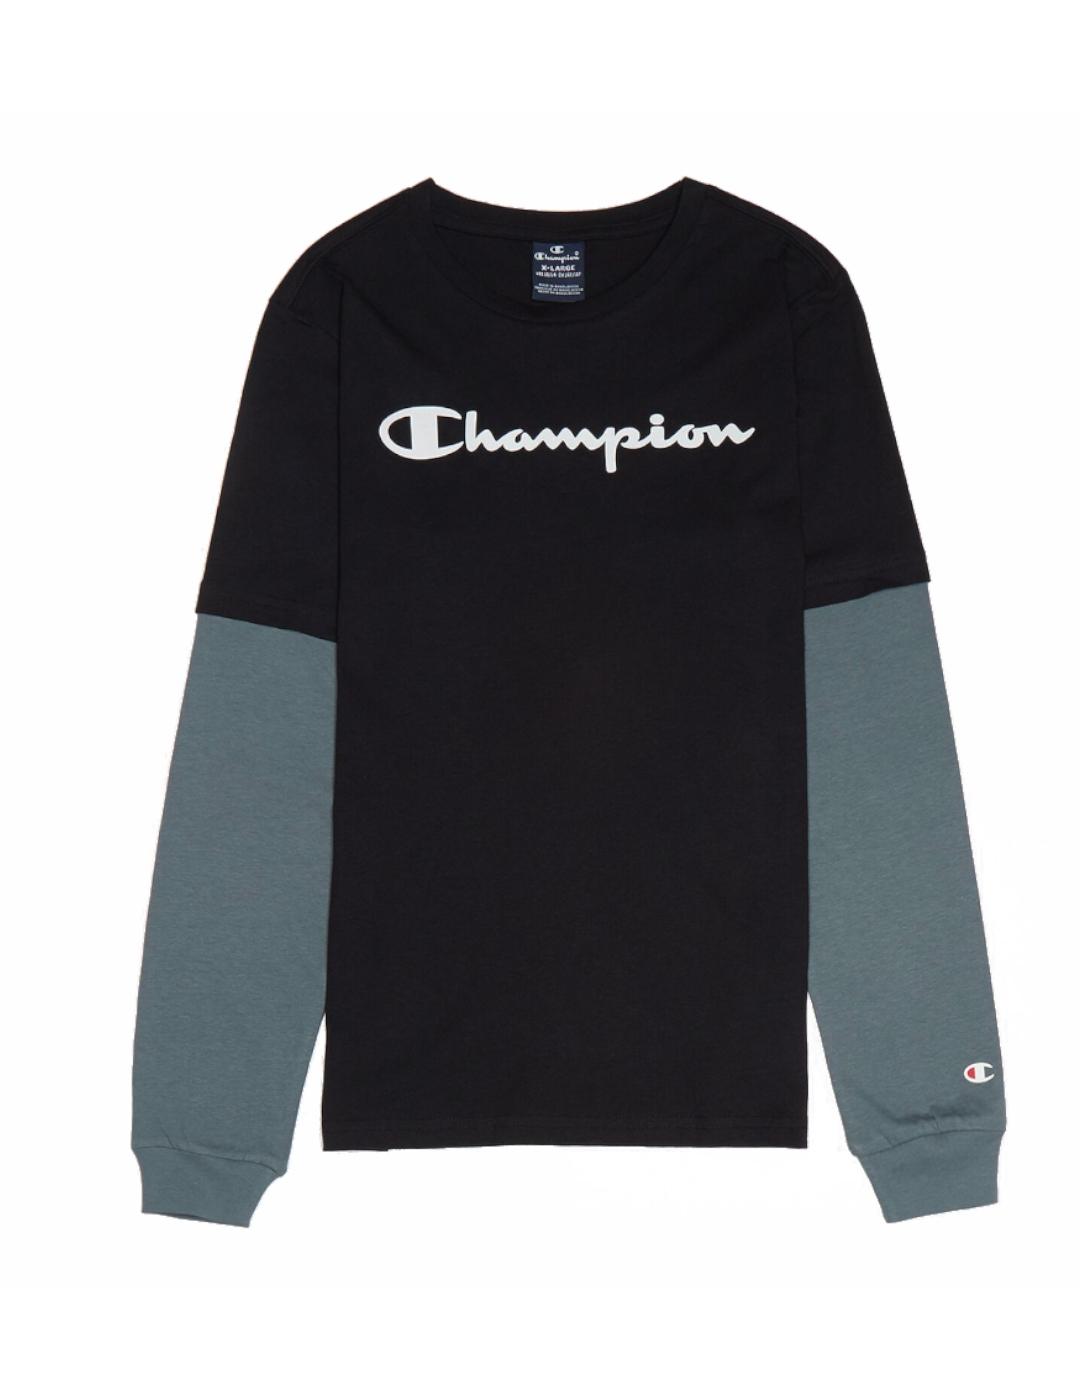 Champion - Champion Camiseta Manga Larga Niño Algodón Suave Diseño Negro